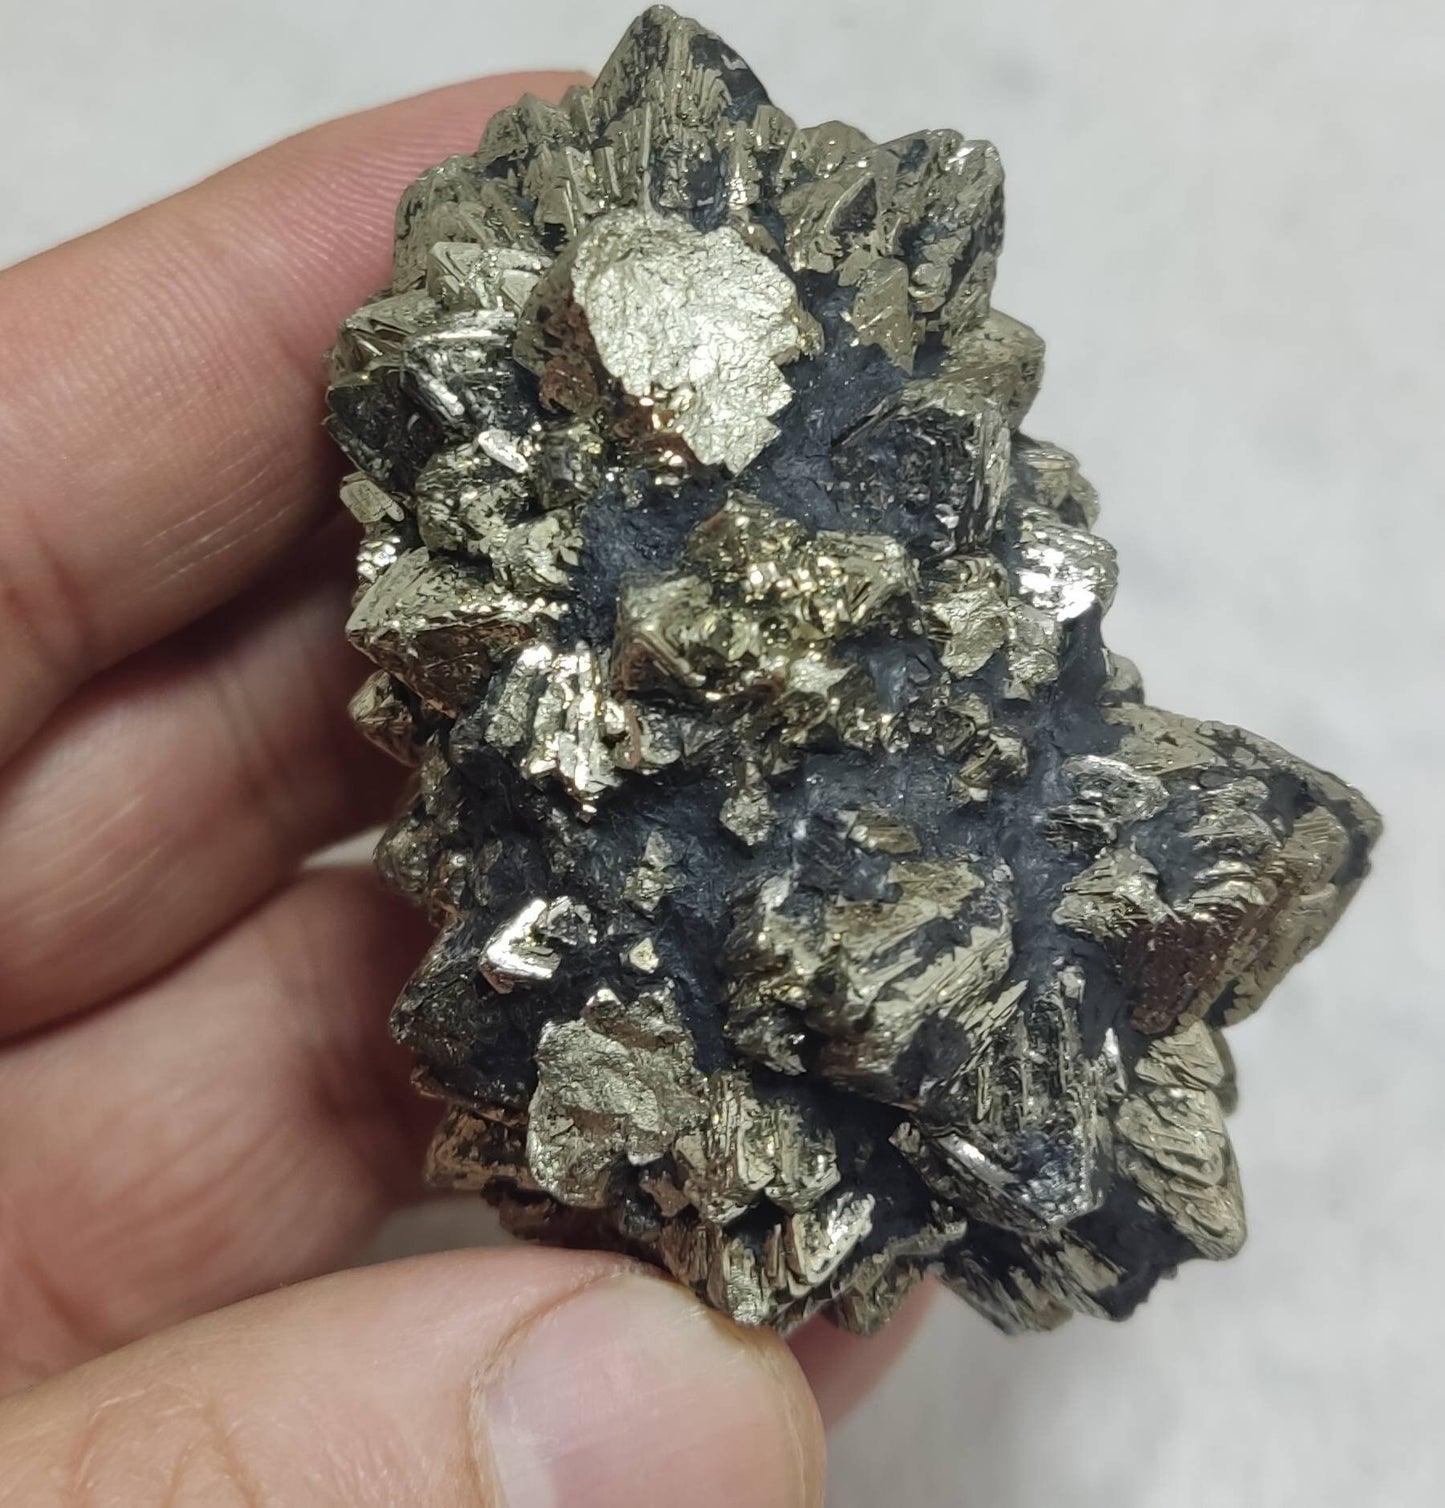 An amazing specimen of pyrite/marcasite 252 grams